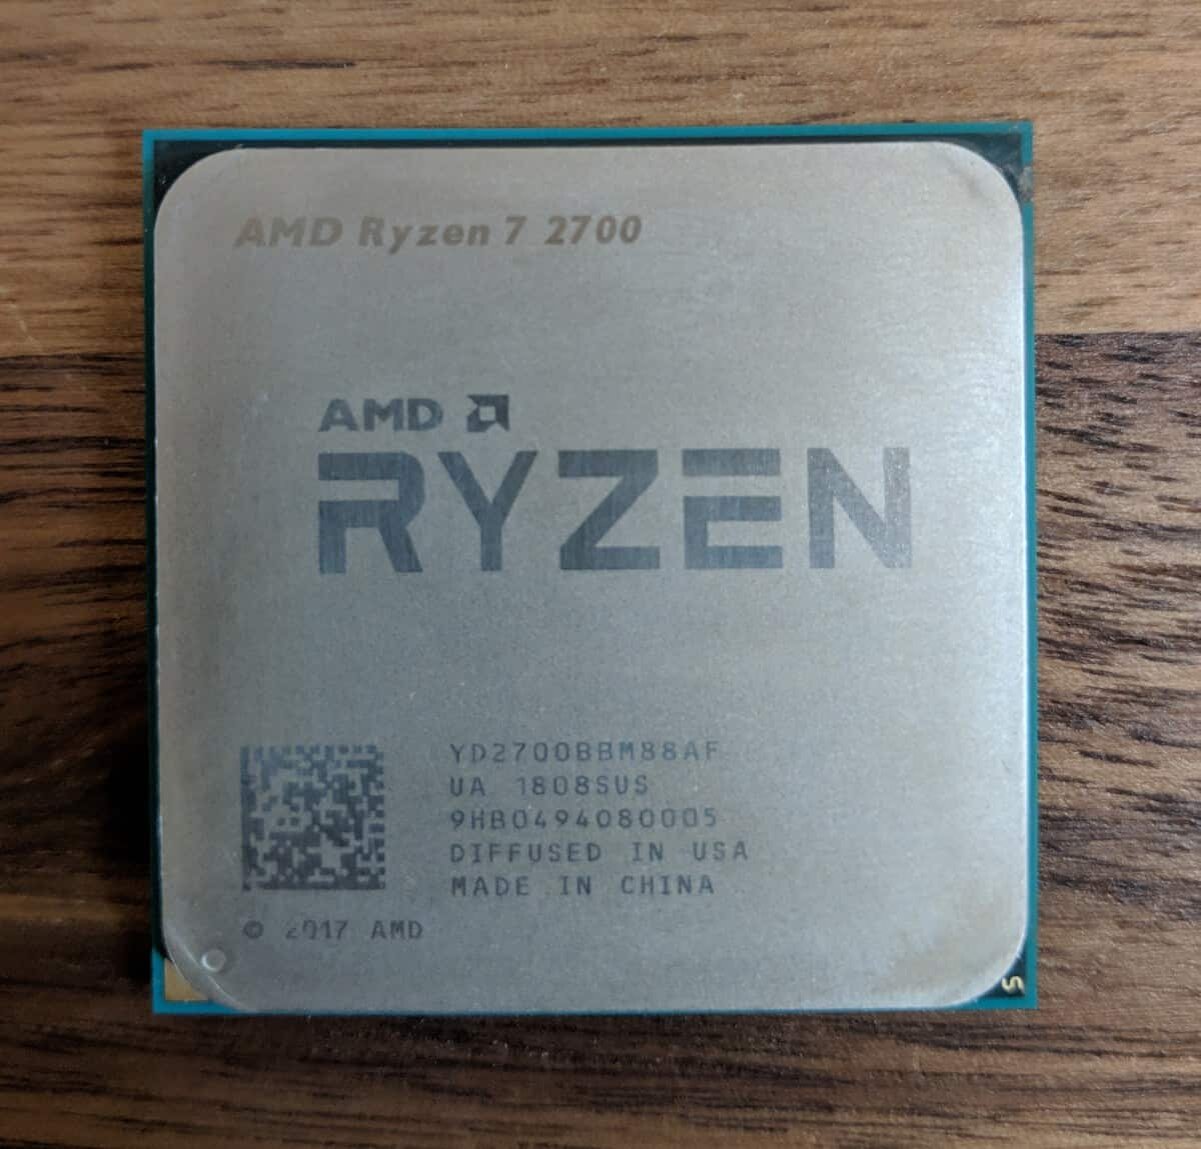 7 2700 купить. Ryzen 7 2700. Процессор AMD Ryzen 7 2700 eight-Core Processor, 3200 МГЦ,. Процессор AMD Ryazan 7 2700. Райзен 2700 OEM.